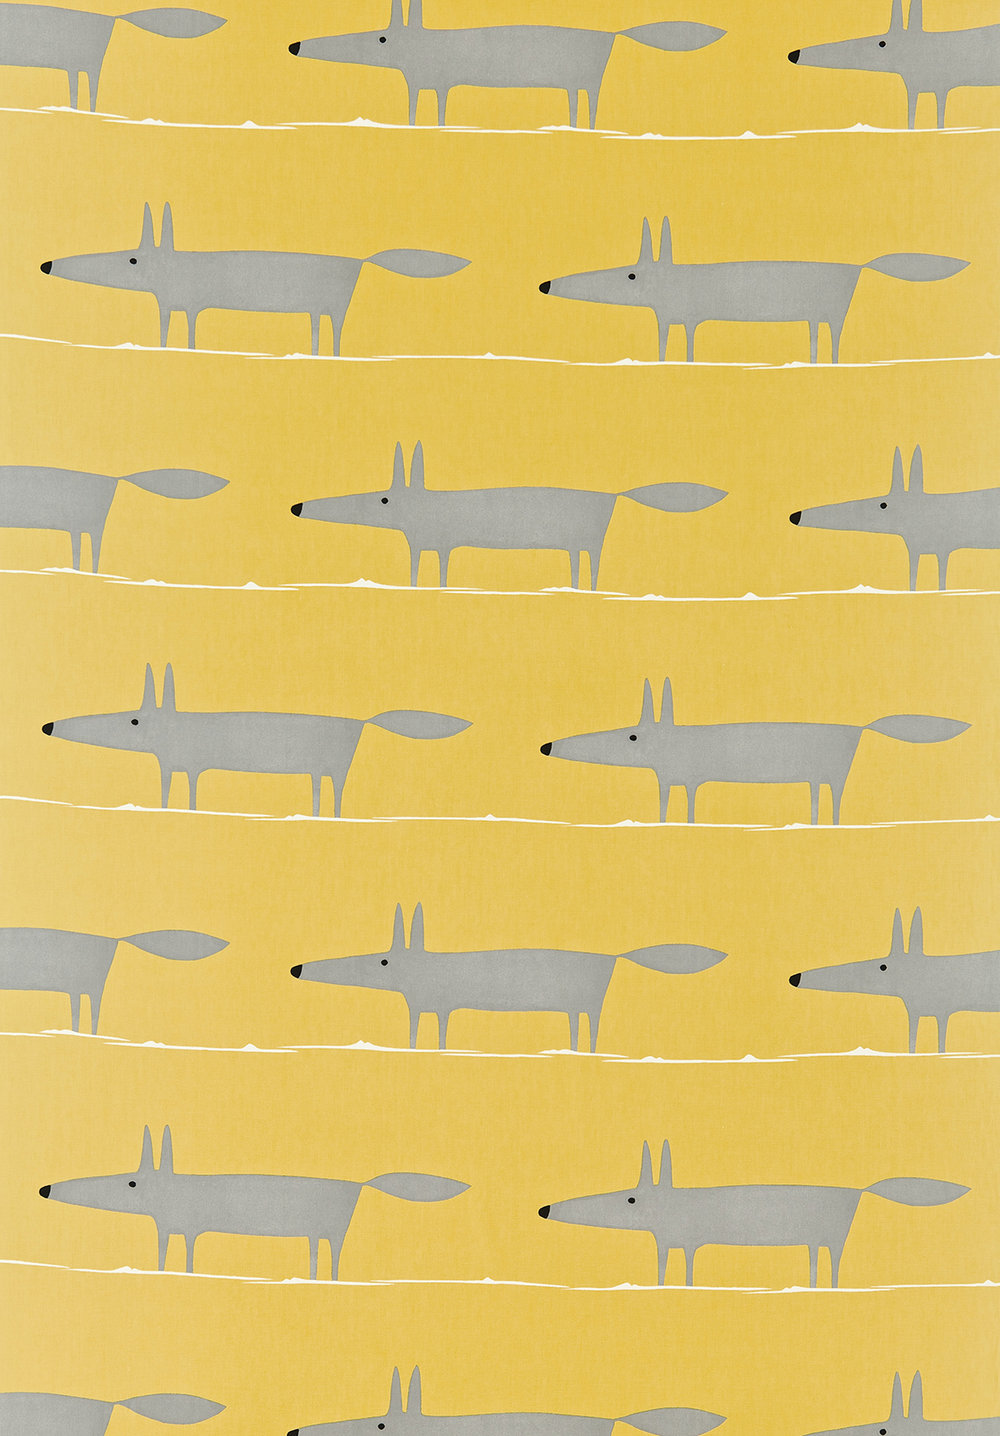 scion fox wallpaper,airplane,yellow,aircraft,aviation,vehicle